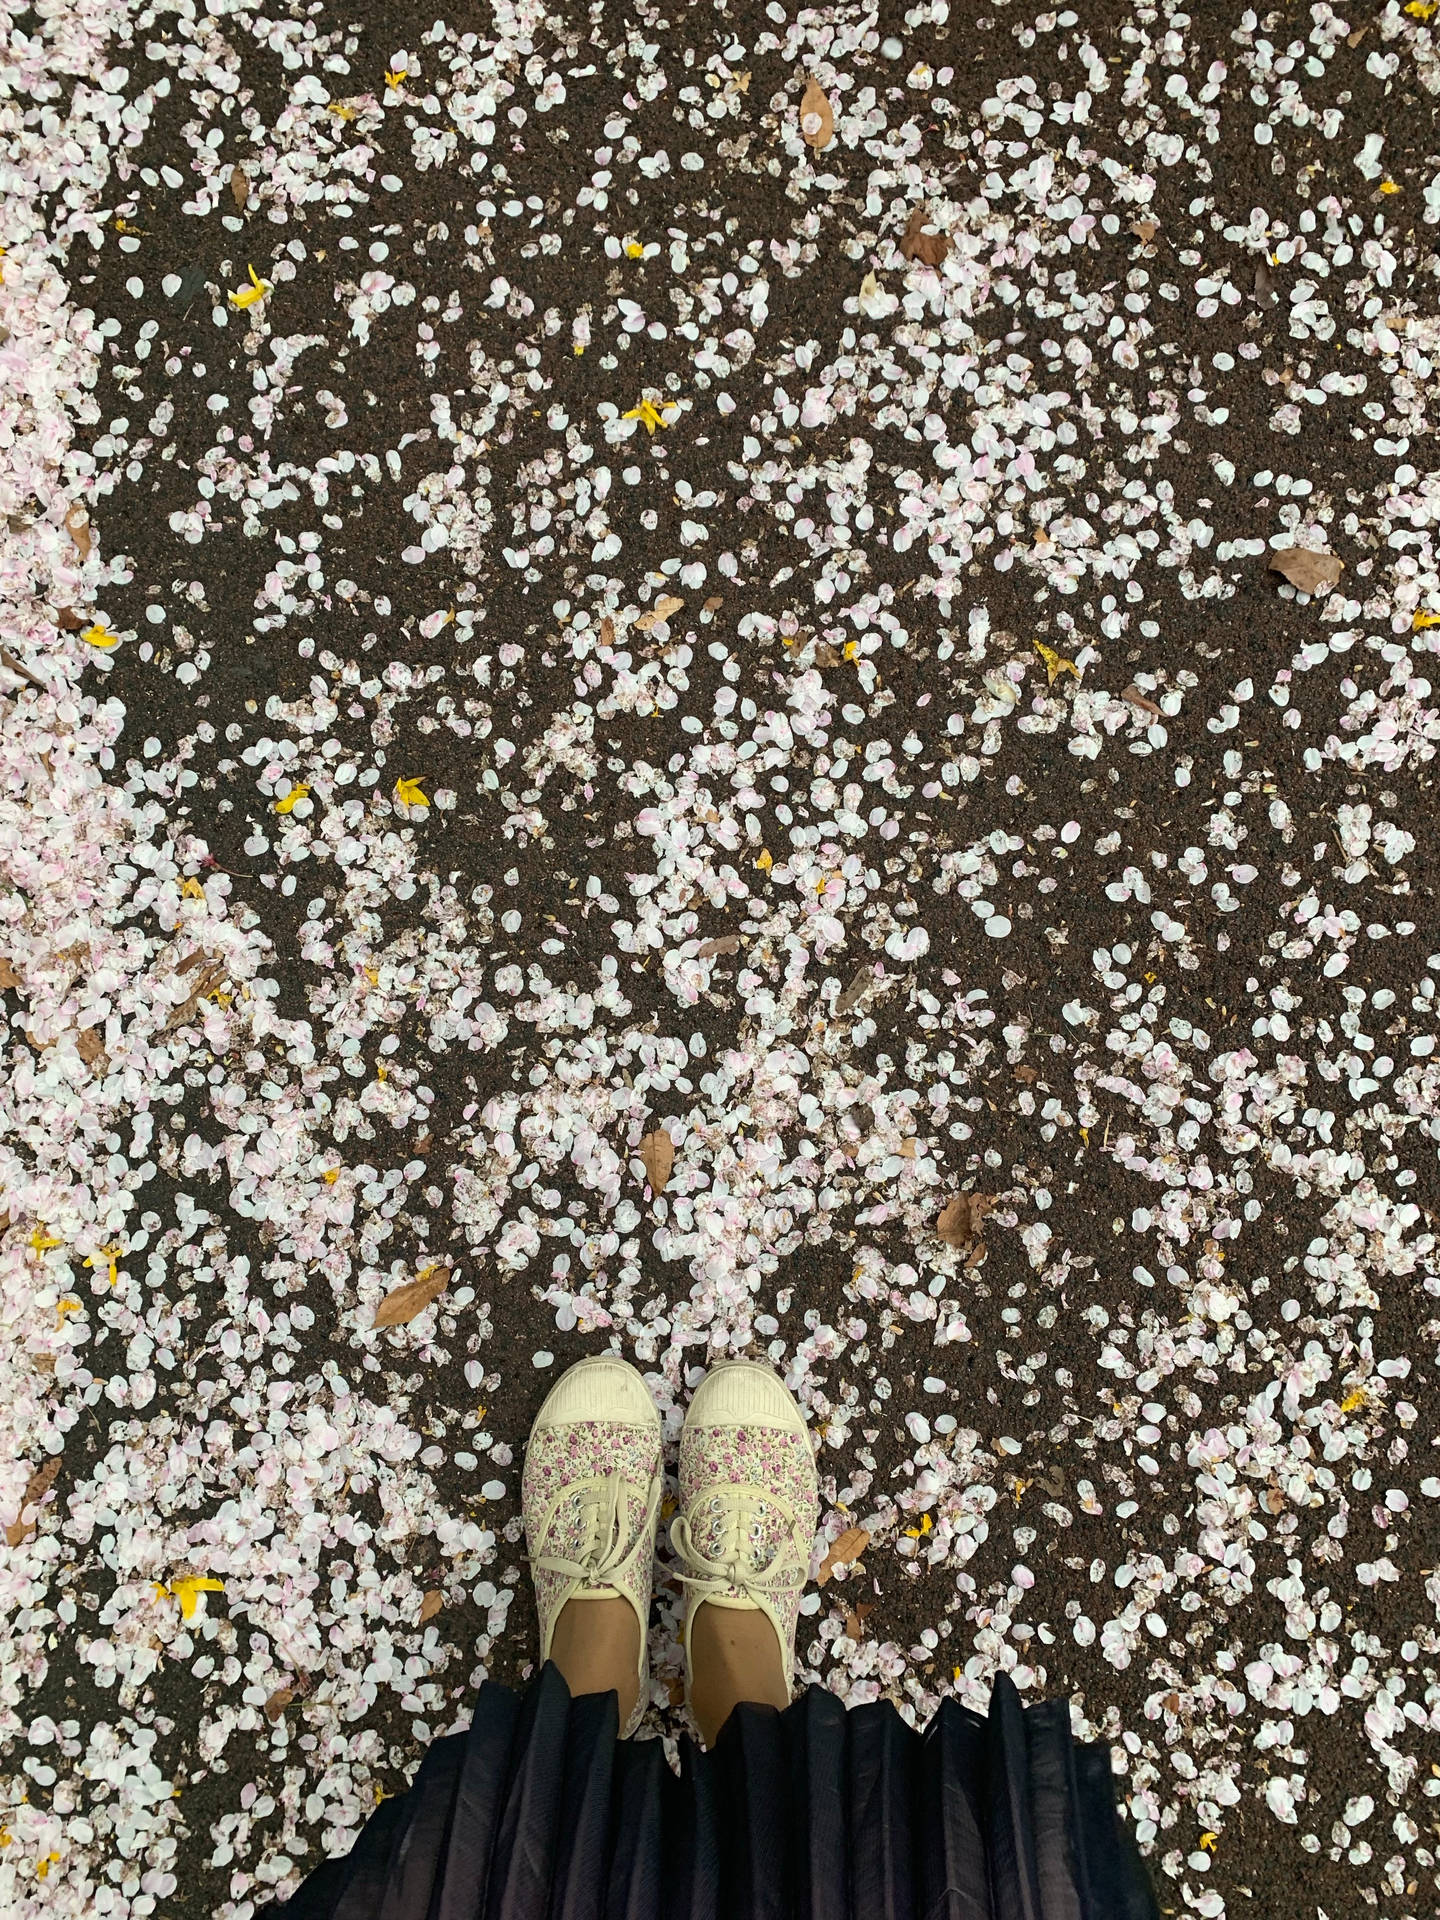 Shoes On Fallen Sakura